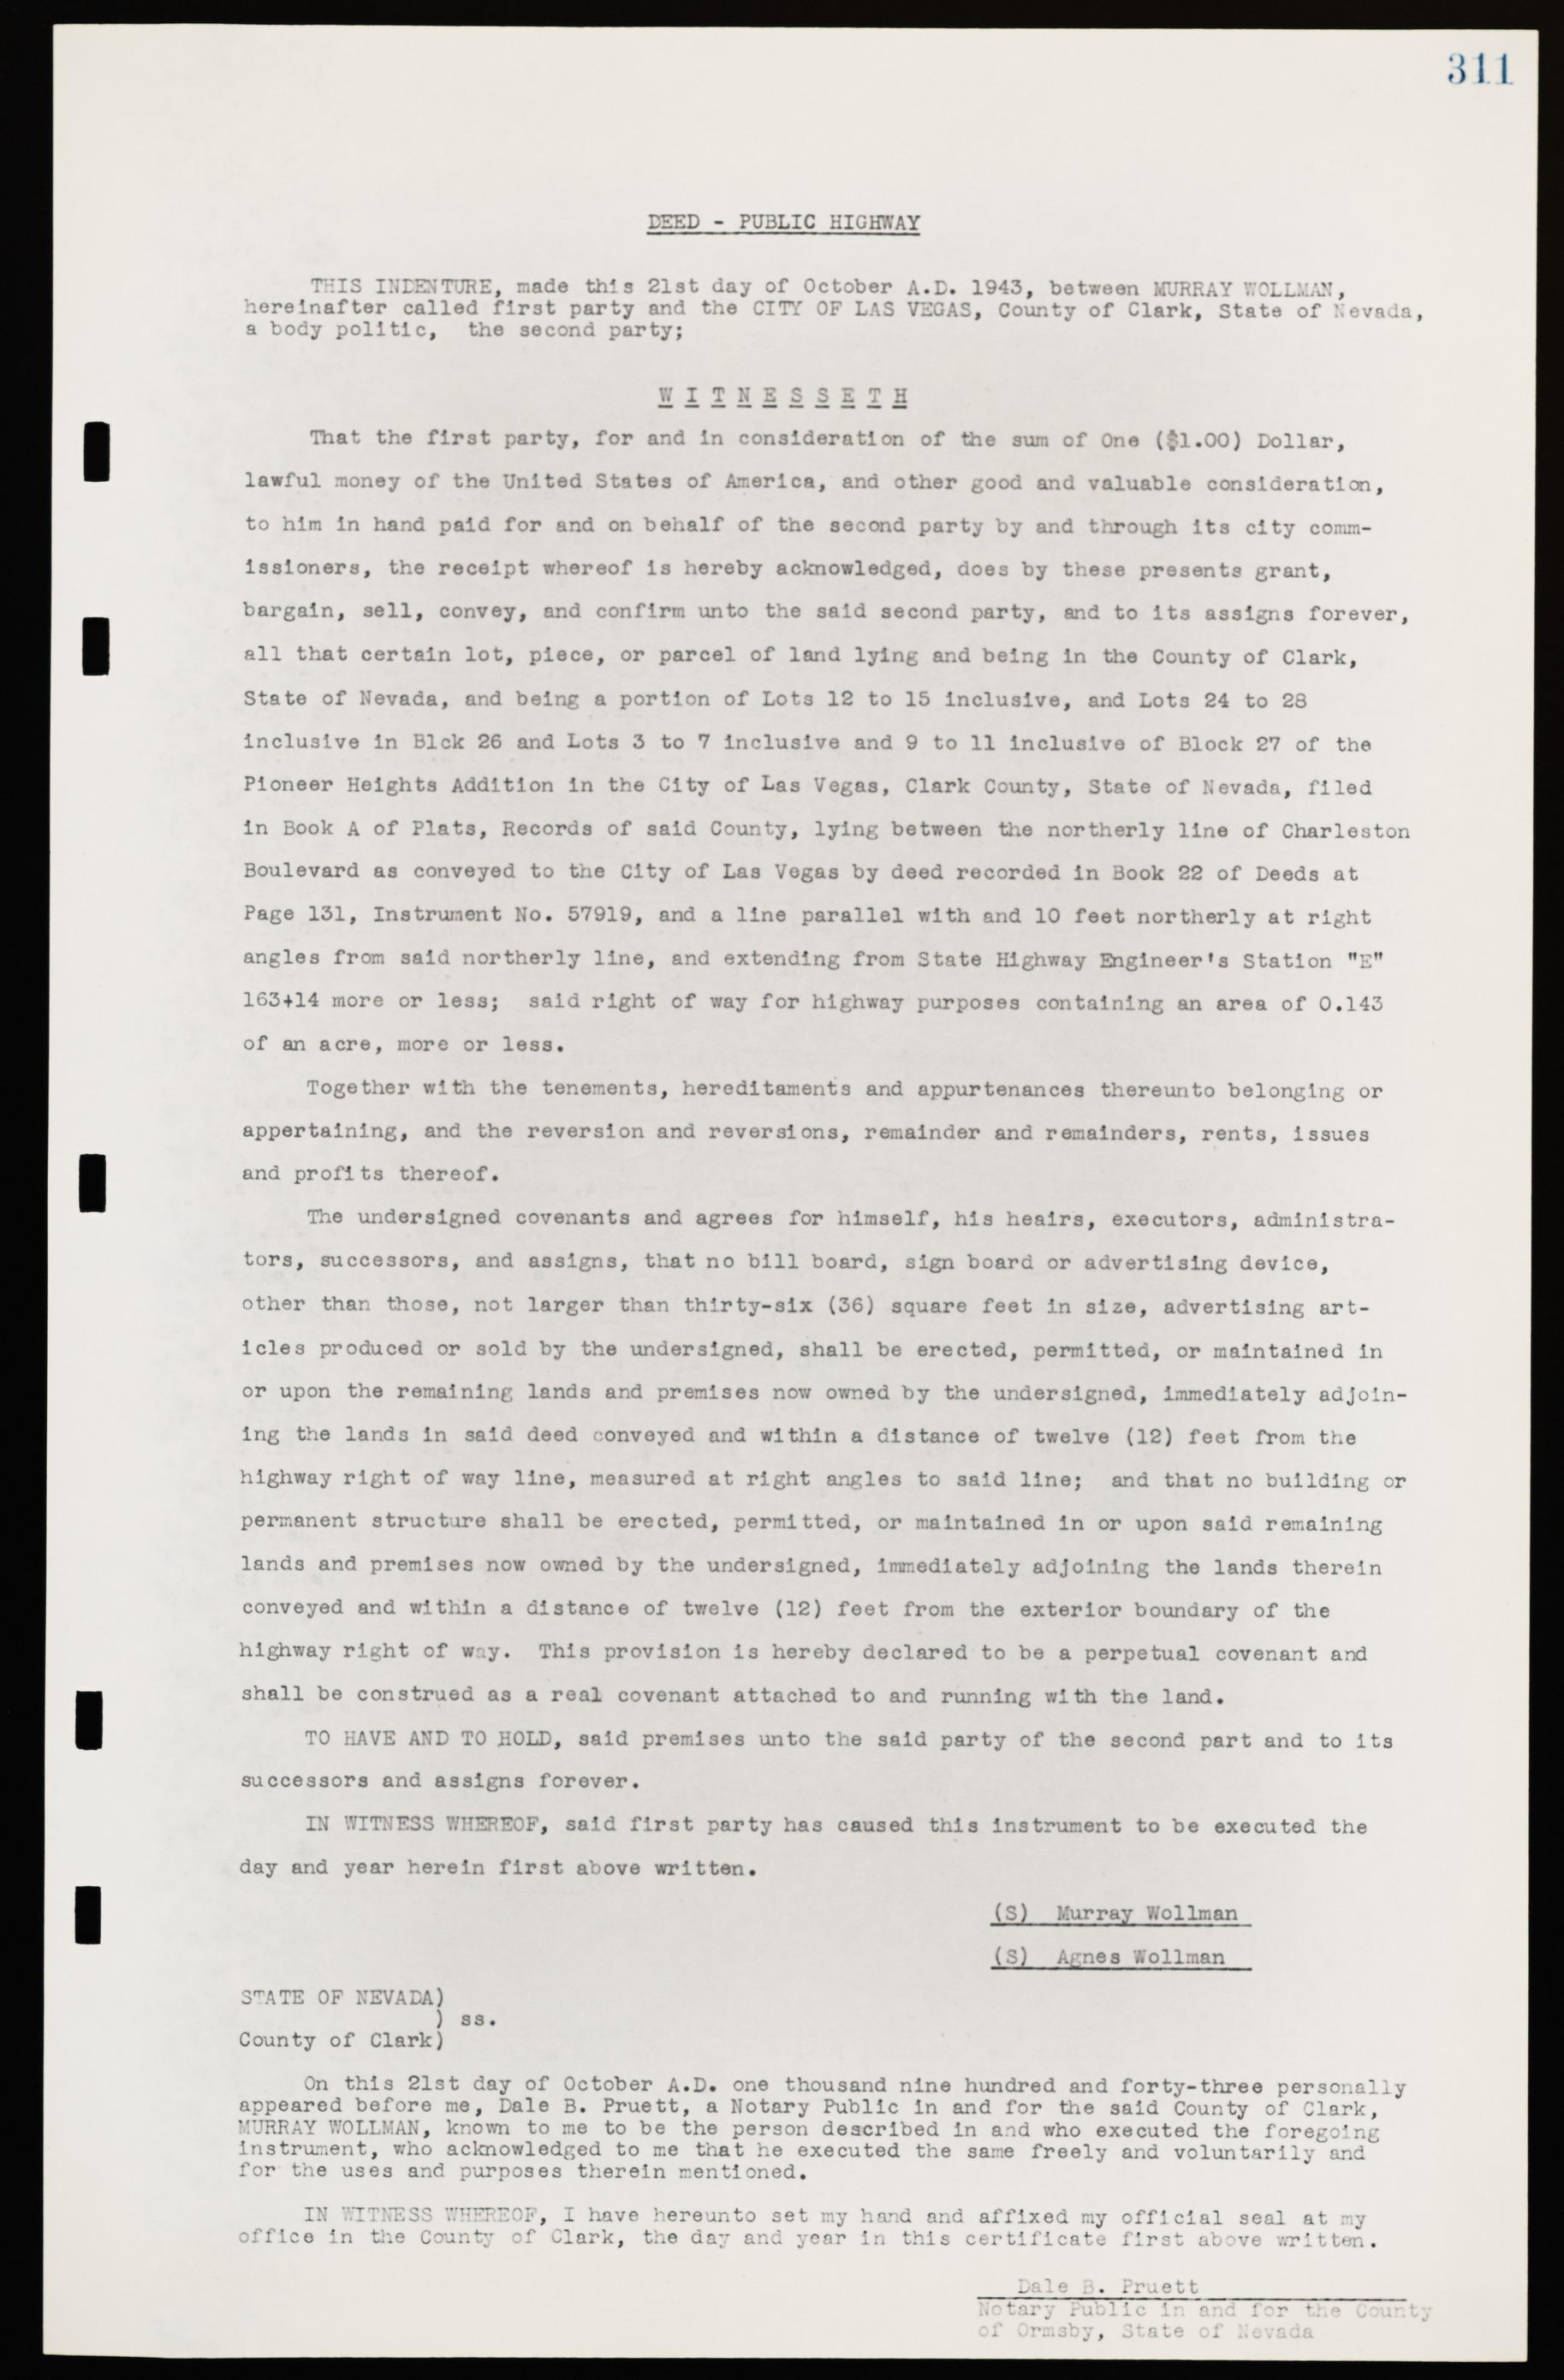 Las Vegas City Commission Legal Documents, February 29, 1944 to February 21, 1945, lvc000016-74